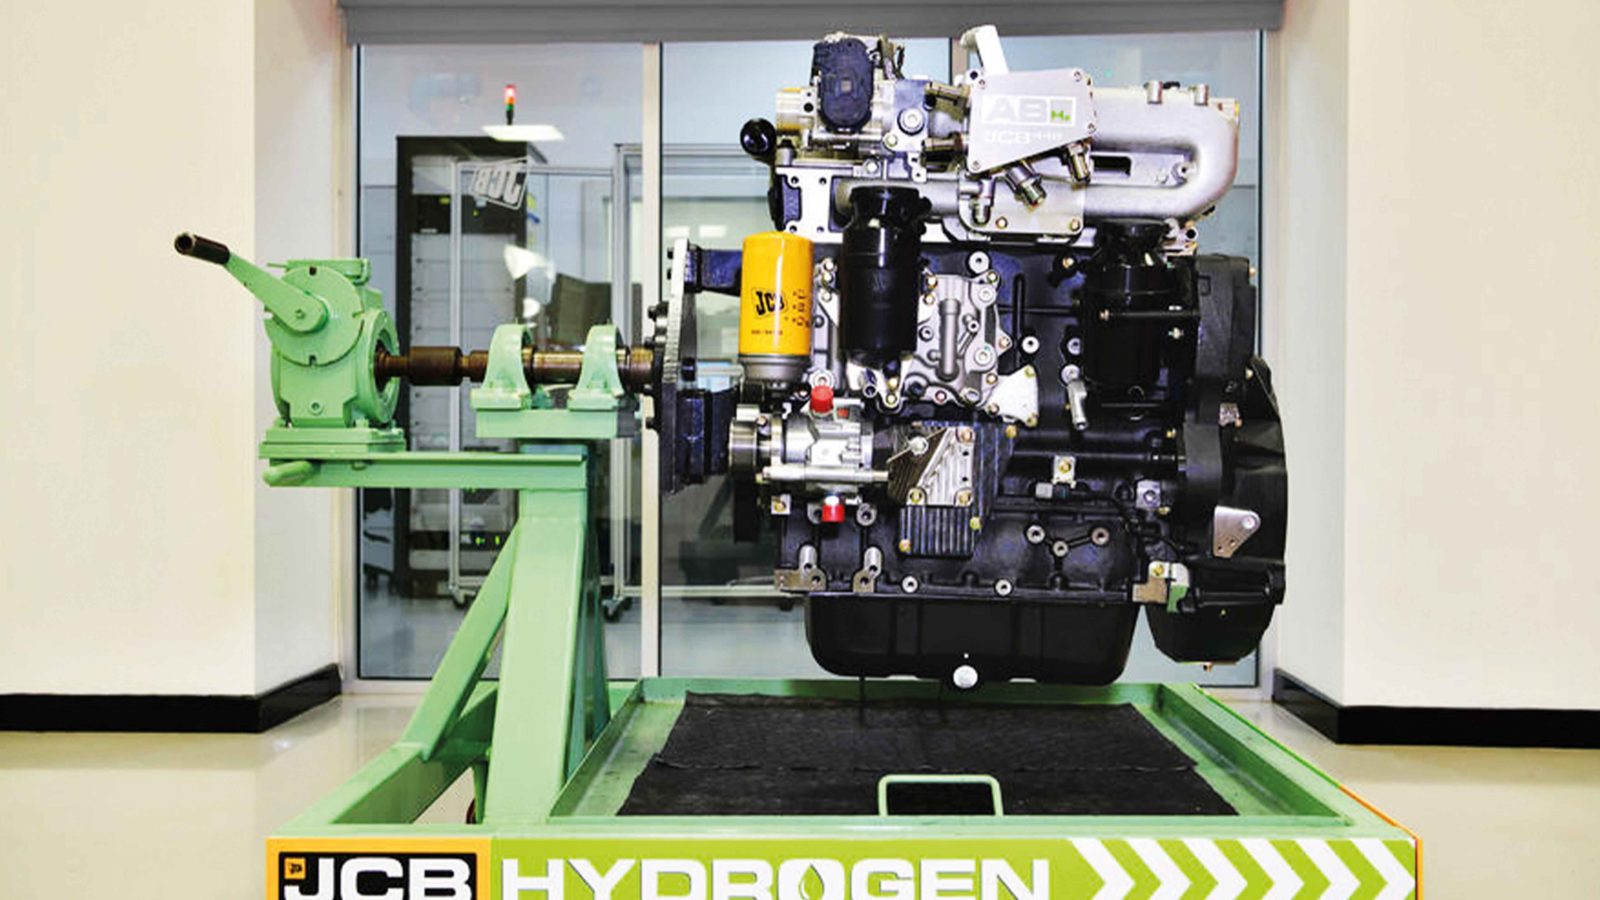 JCB hydrogen engine copy